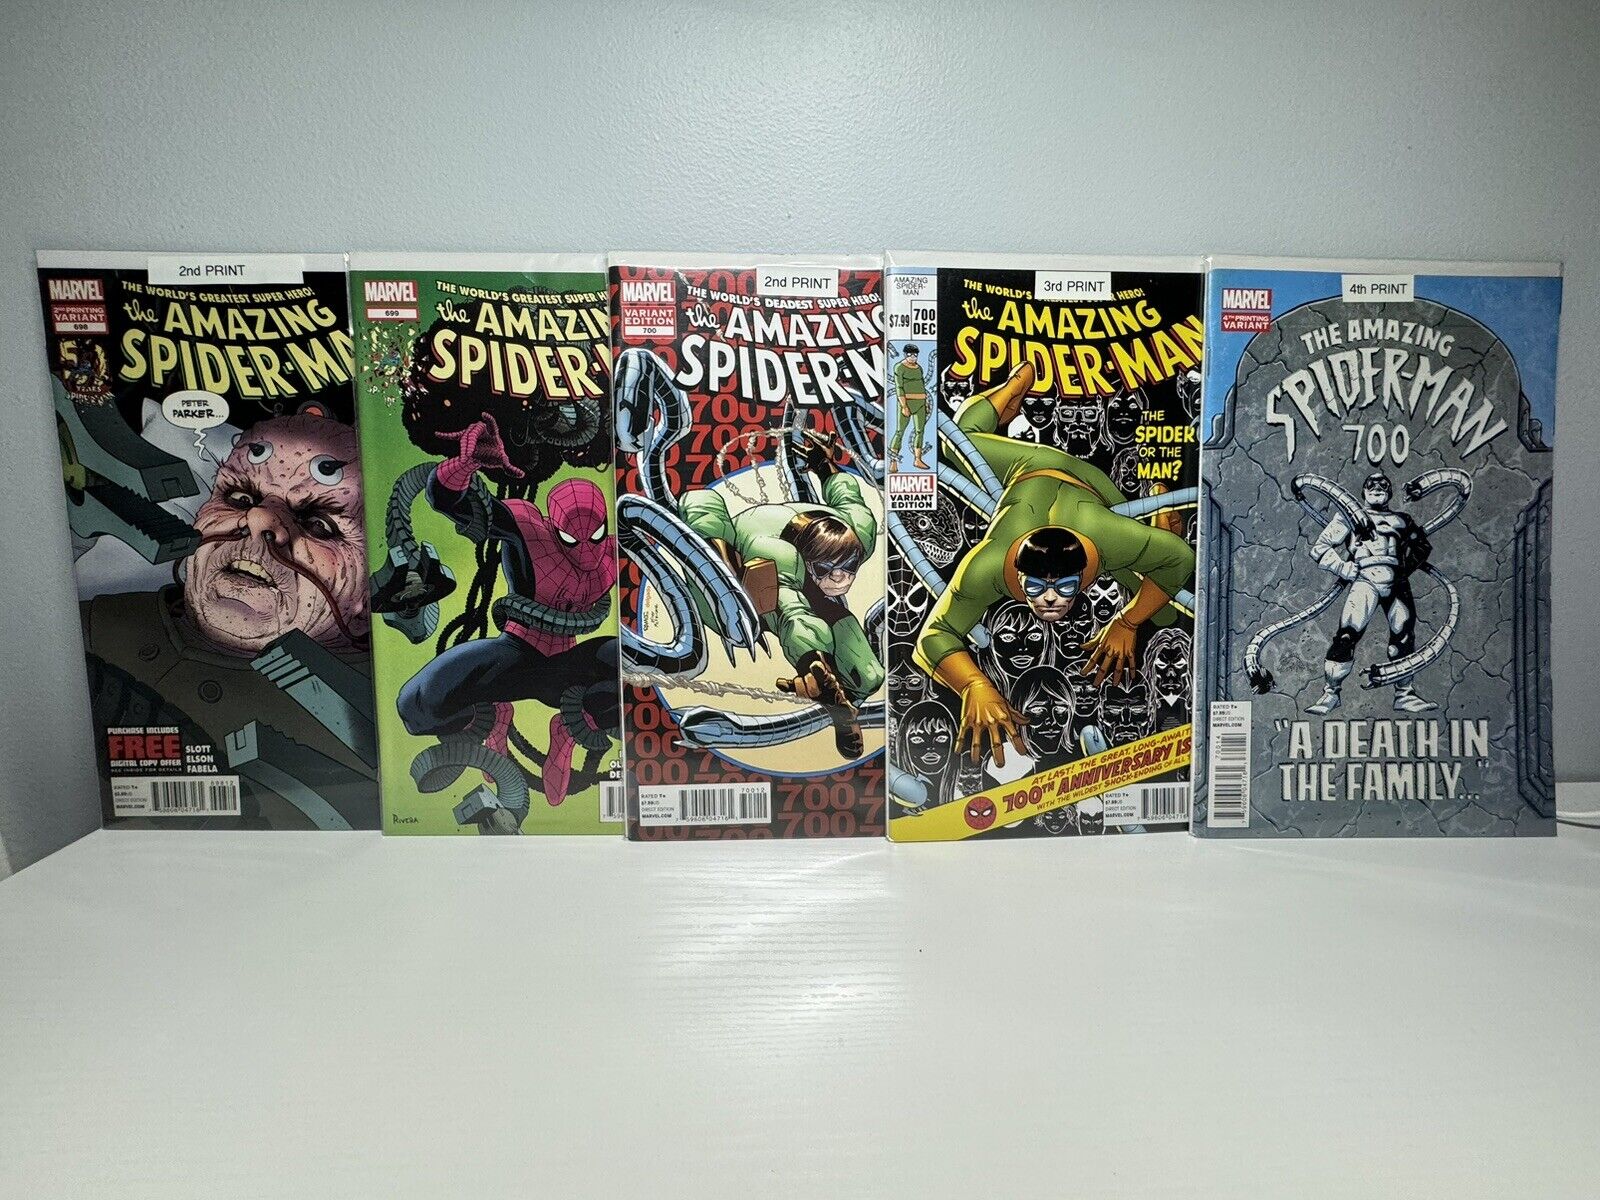 The Amazing Spider-Man #698 2nd Print. 699 1st Print. 700 2nd Print. 700 3rd&4th